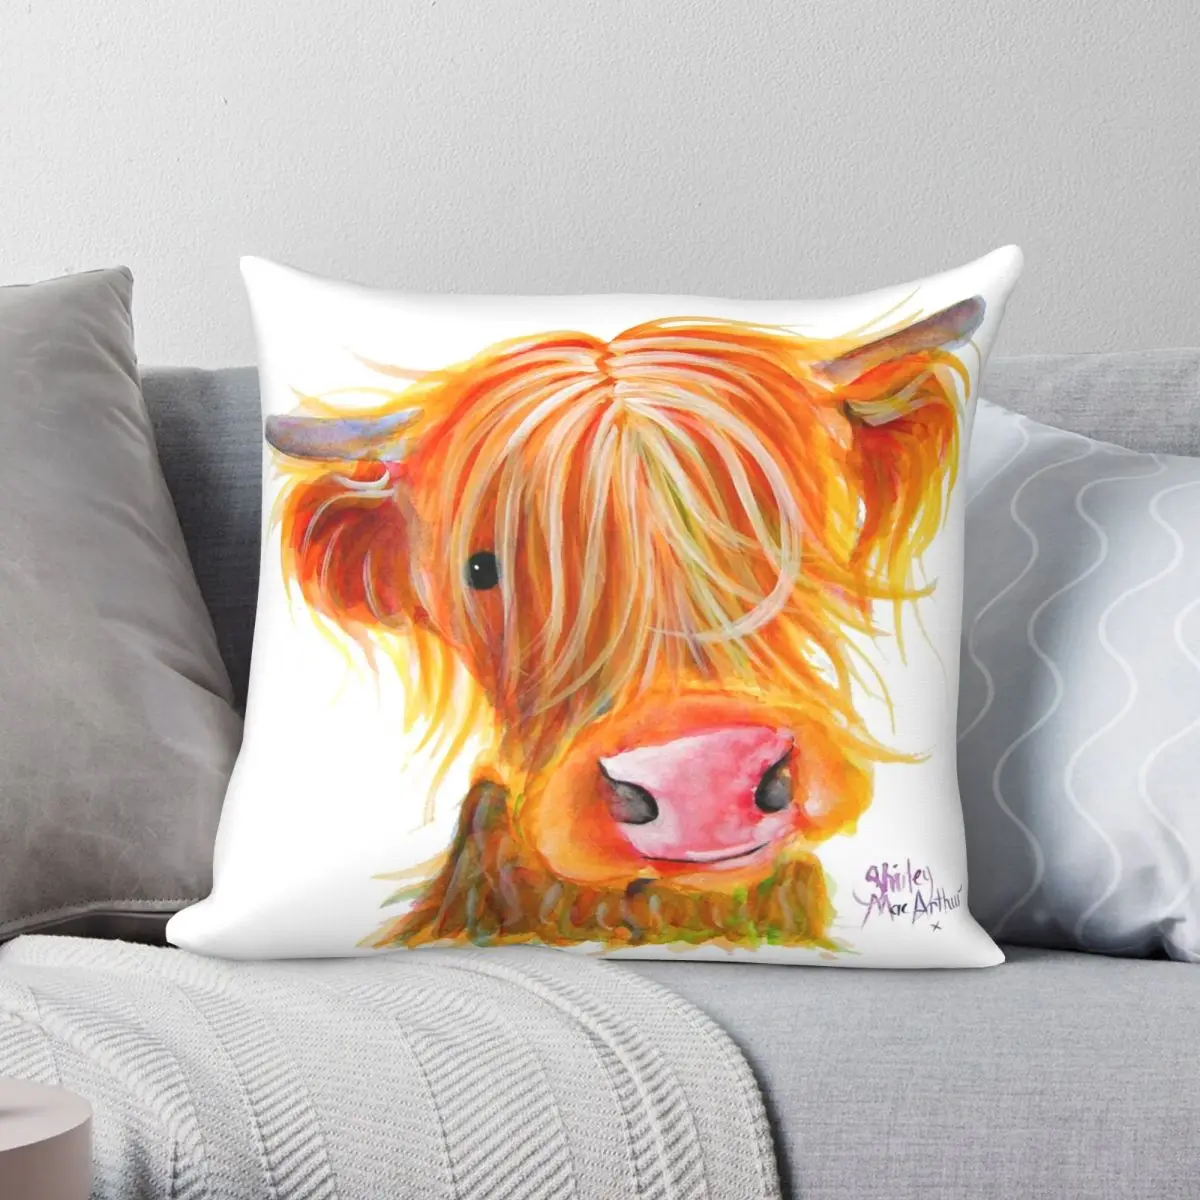 Scottish Highland Cow Square Pillowcase Polyester Linen Velvet Creative Zip Decorative Pillow Case Bed Cushion Cover 18"